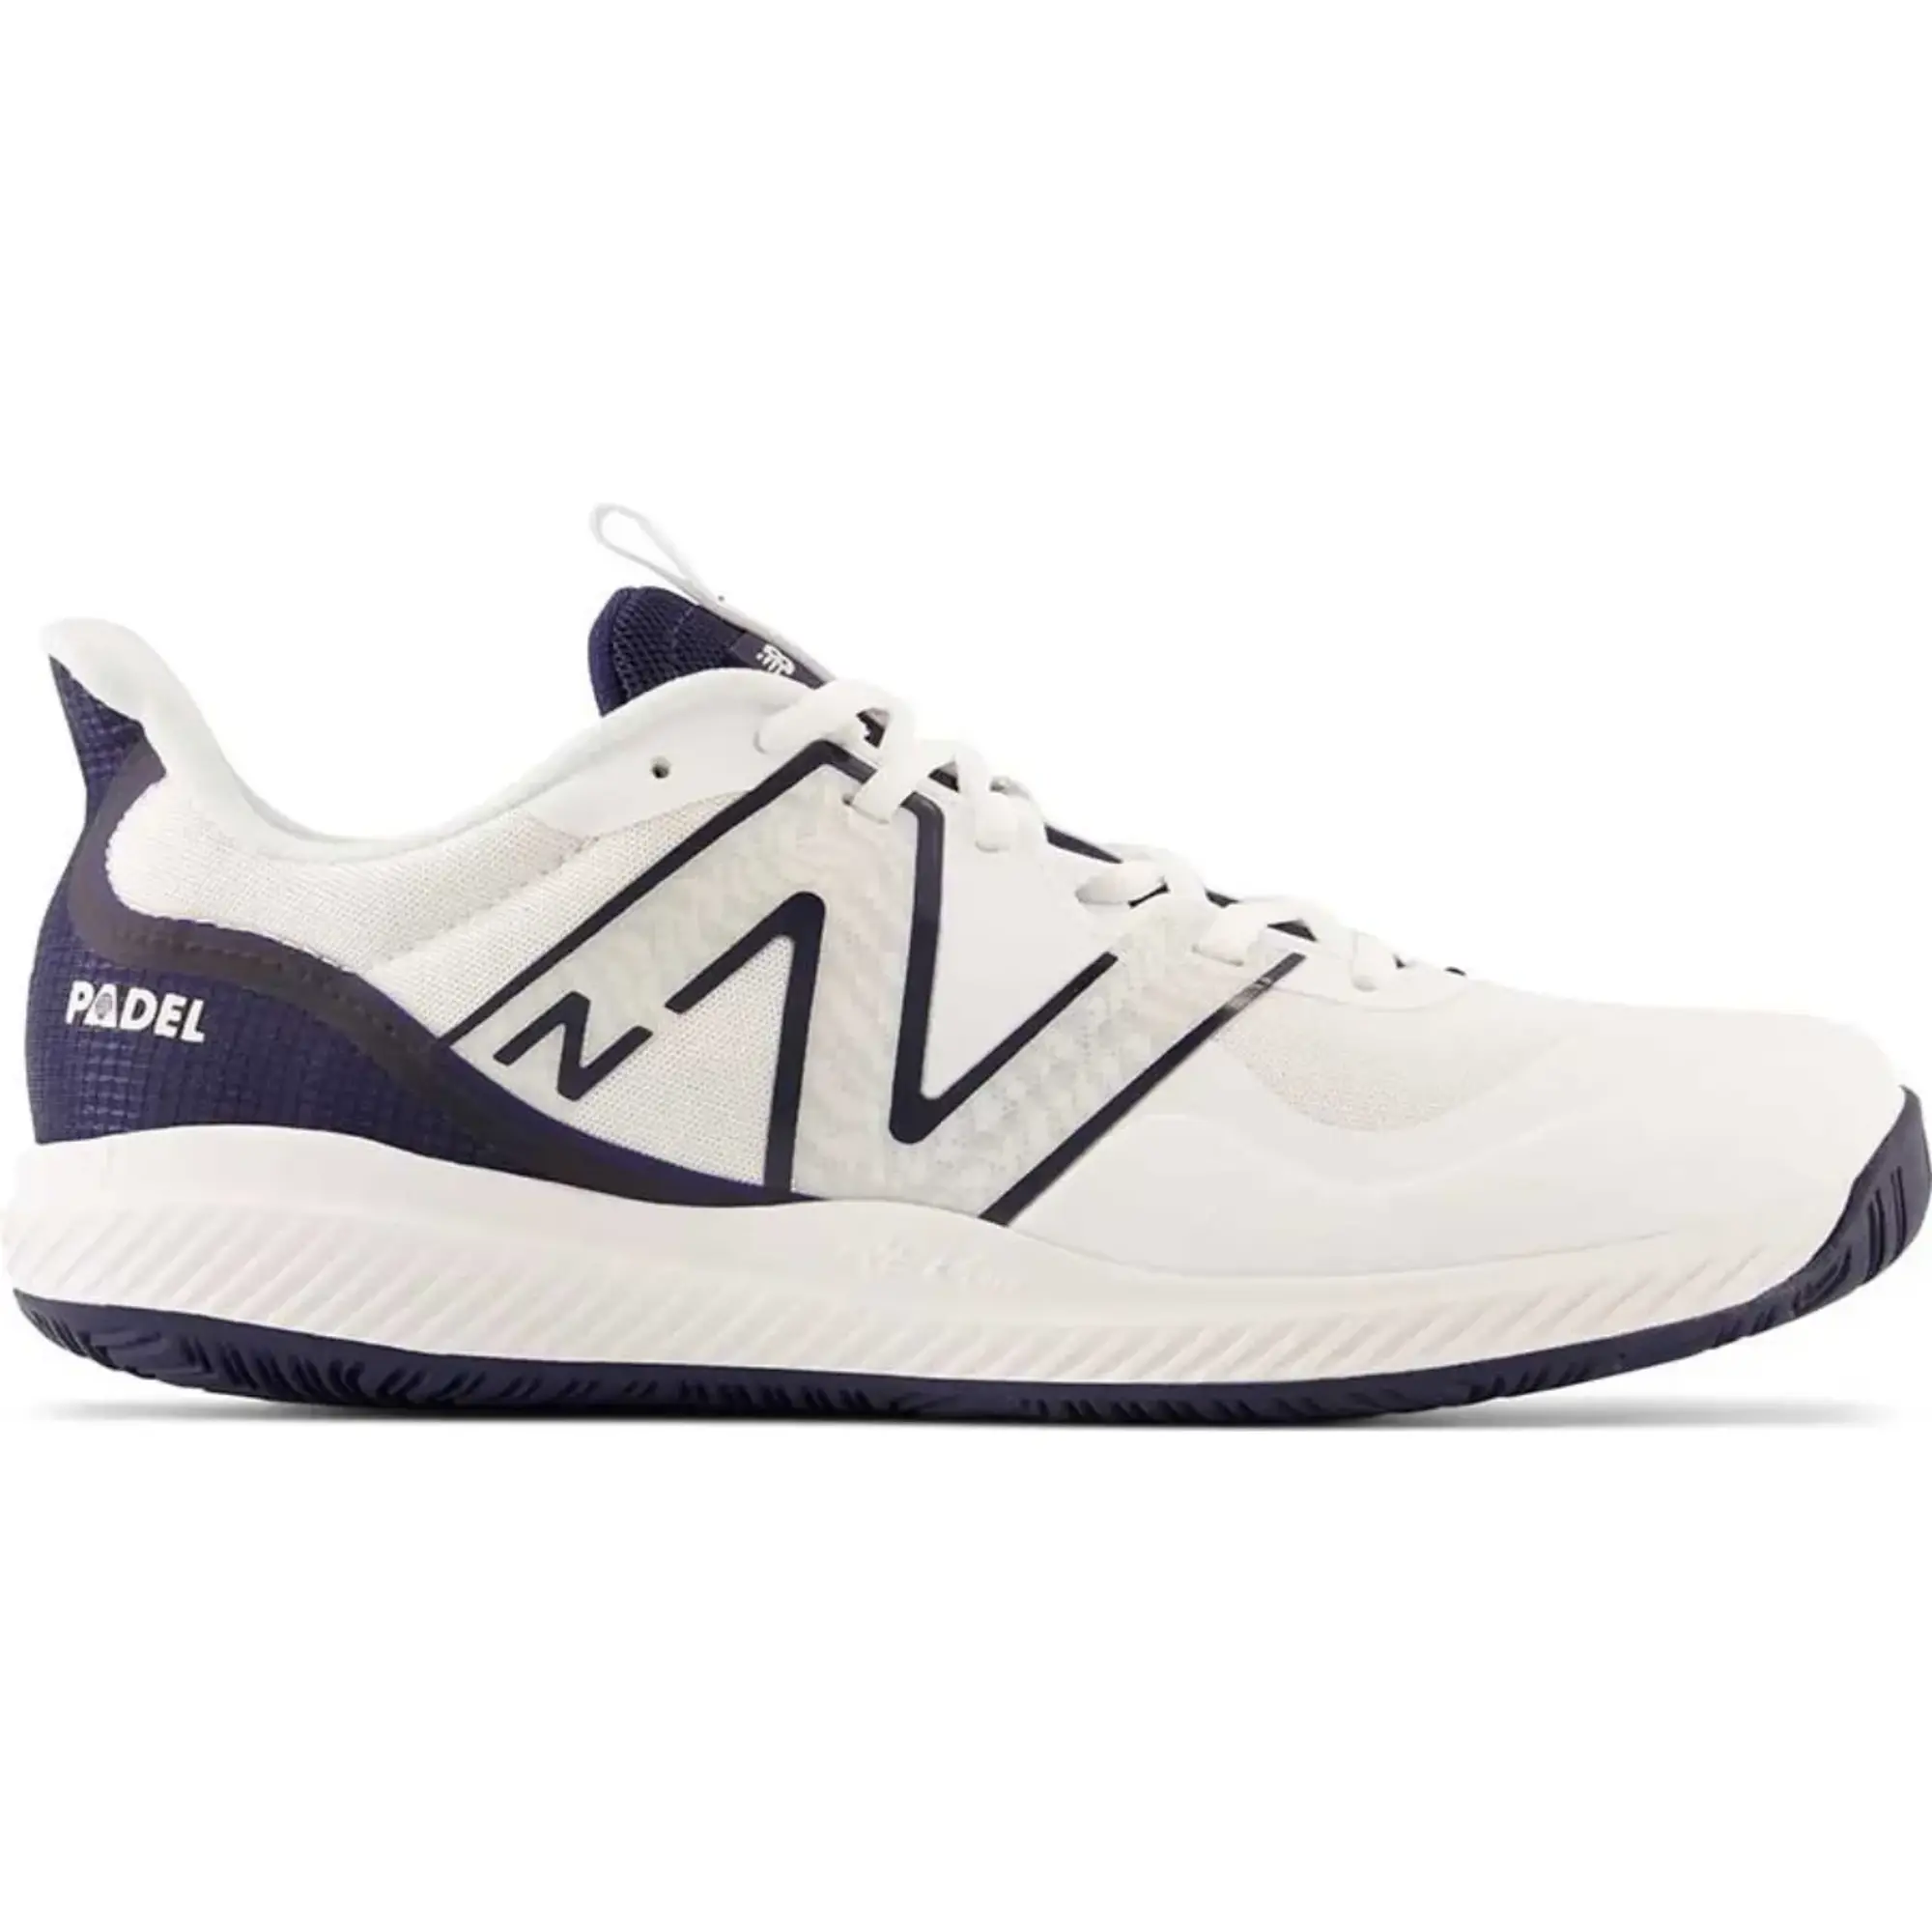 New Balance 796v3 All Court Shoes  - Beige